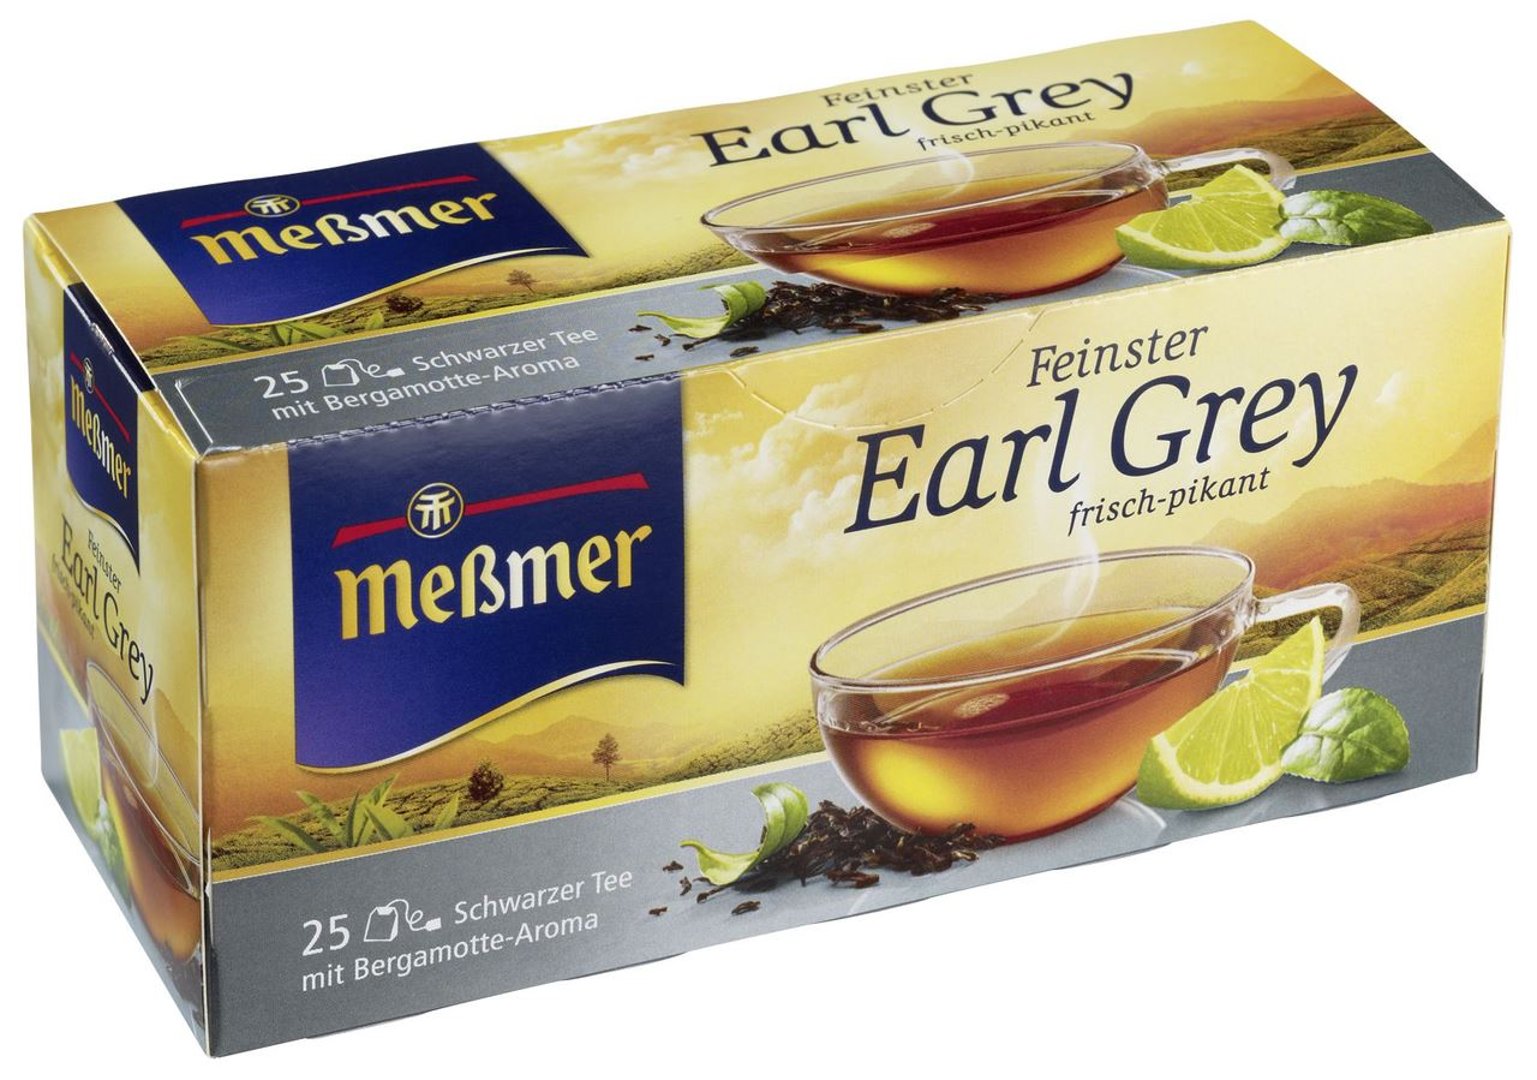 MEßMER - Tee Earl Grey frisch-pikant, 25 Teebeutel - 12 x 44 g Karton